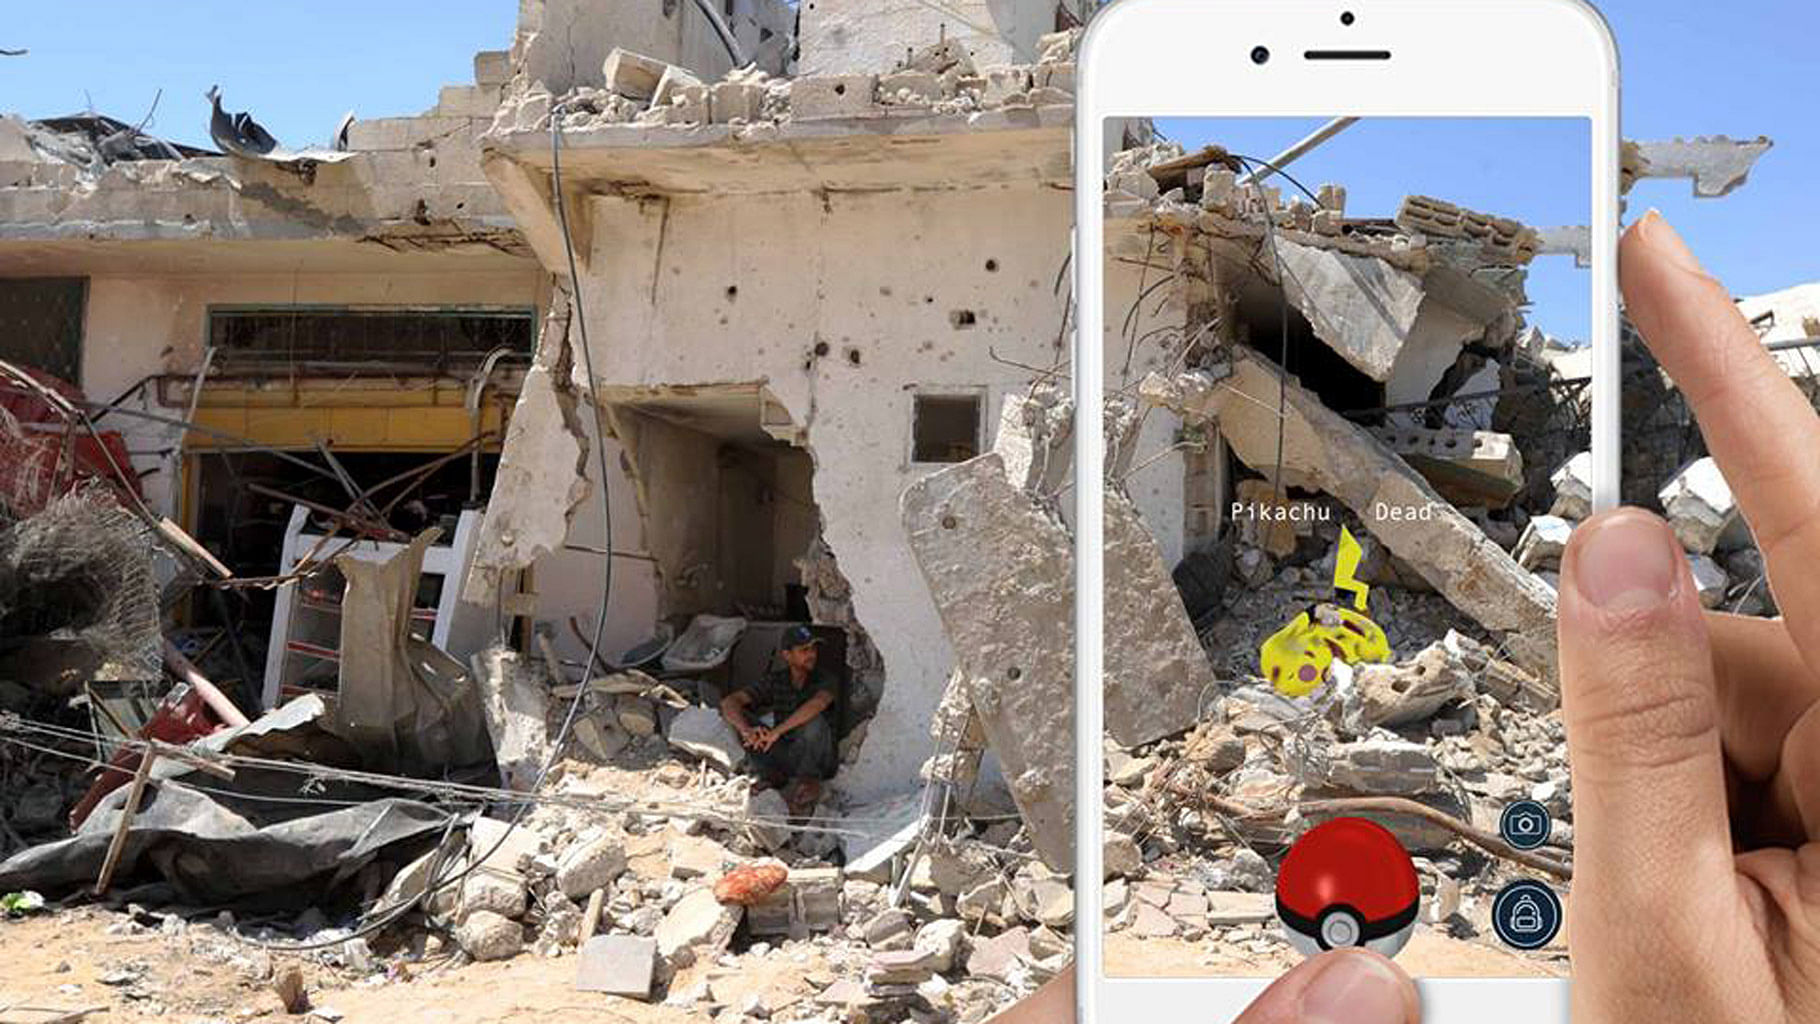 Playing Pokemon Go in Palestine. (Photo Courtesy: twitter/<a href="https://twitter.com/msalimkassam/status/753562949881593856">msalimkassam</a>) 